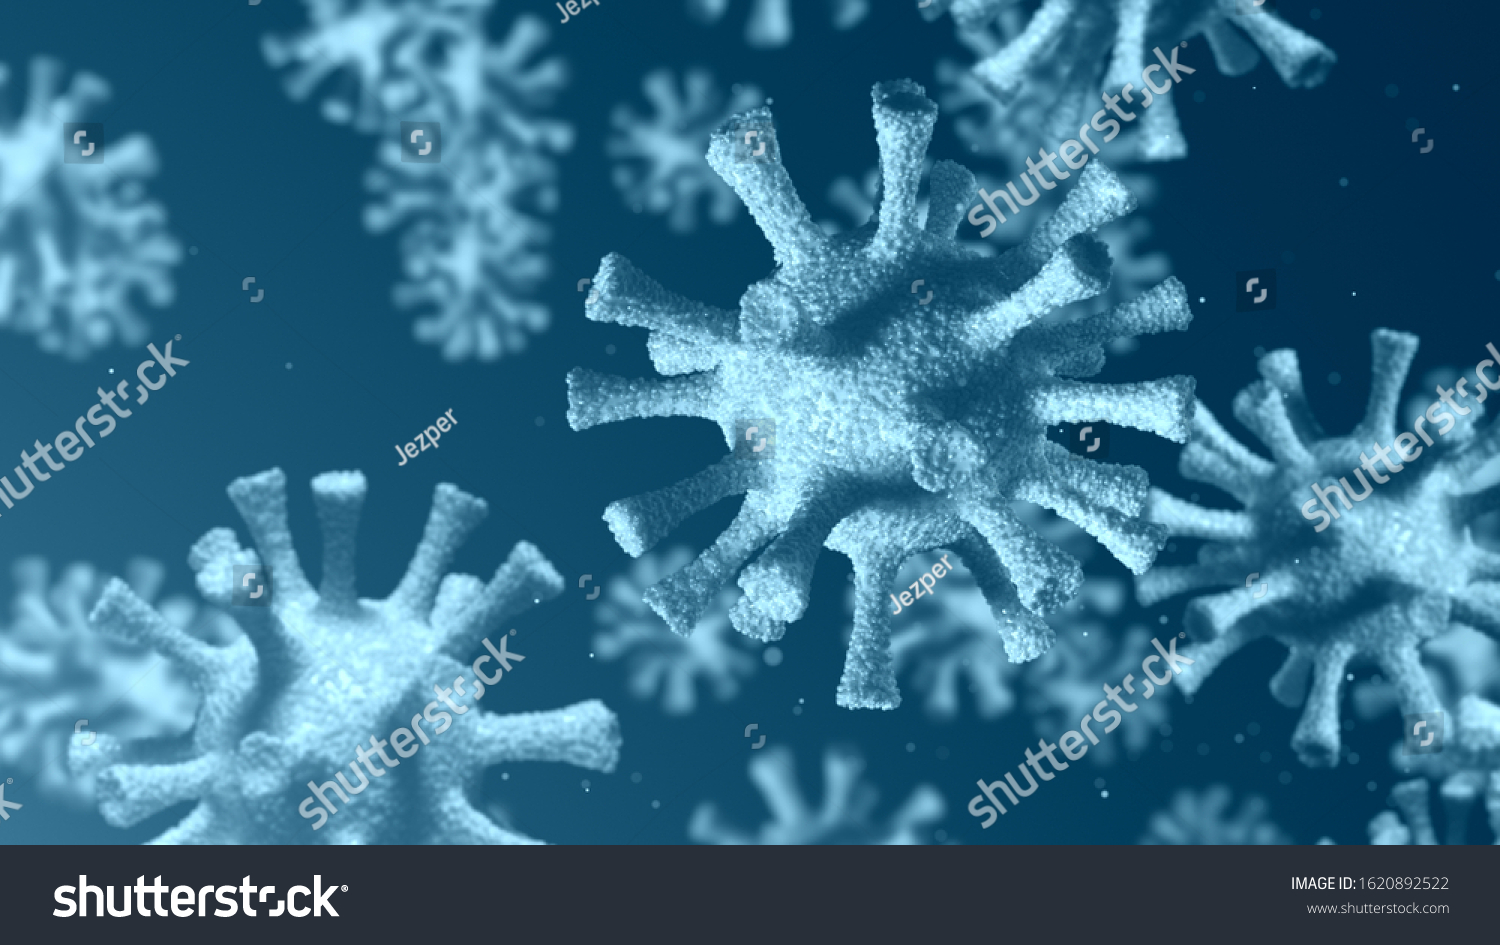 Group of virus cells. 3D illustration of Coronavirus cells